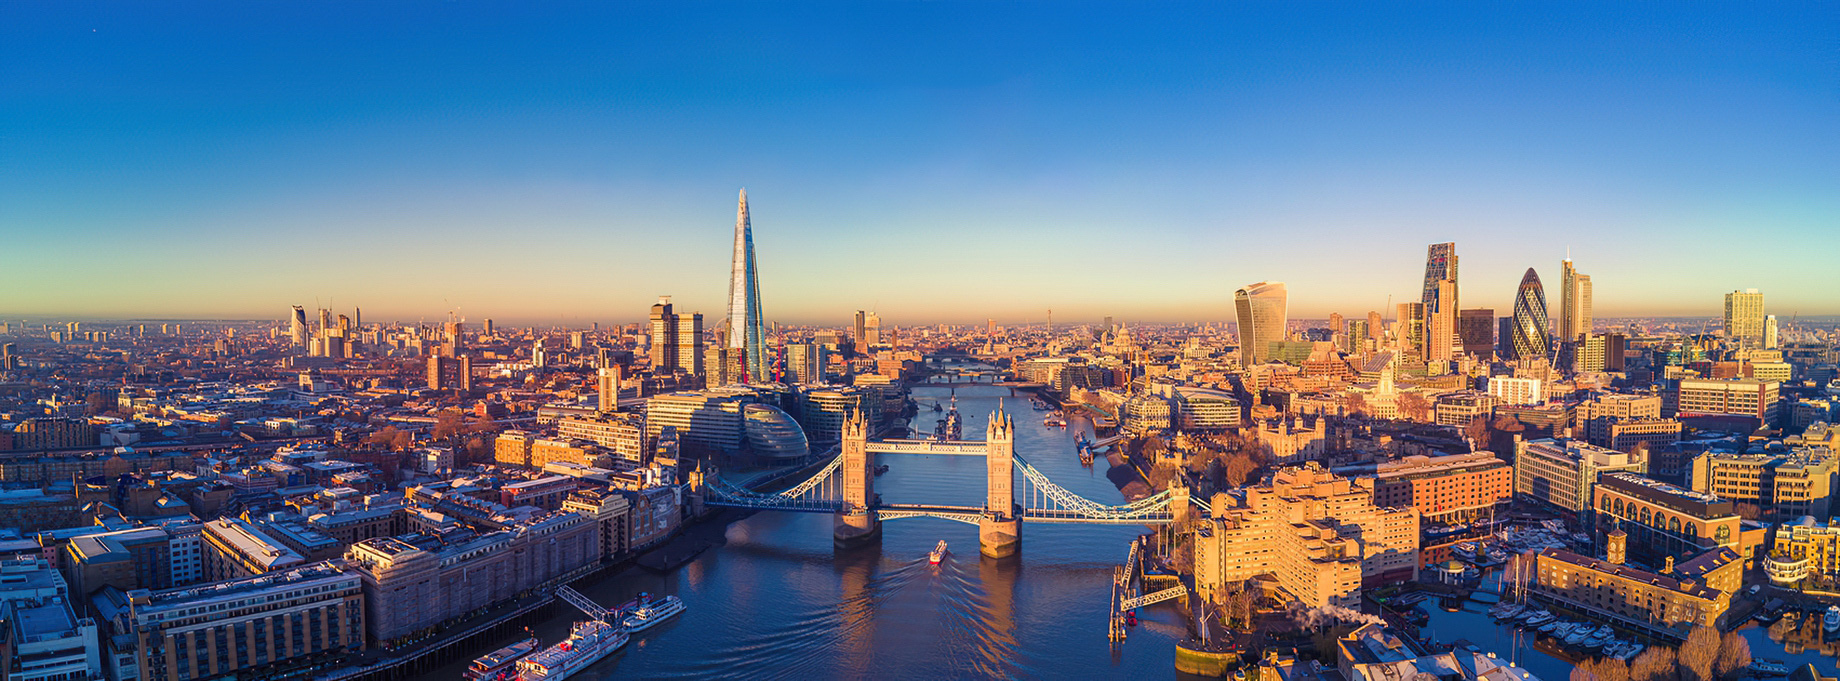 Baglioni Hotel London – South Kensington, London, United Kingdom – London Aerial View